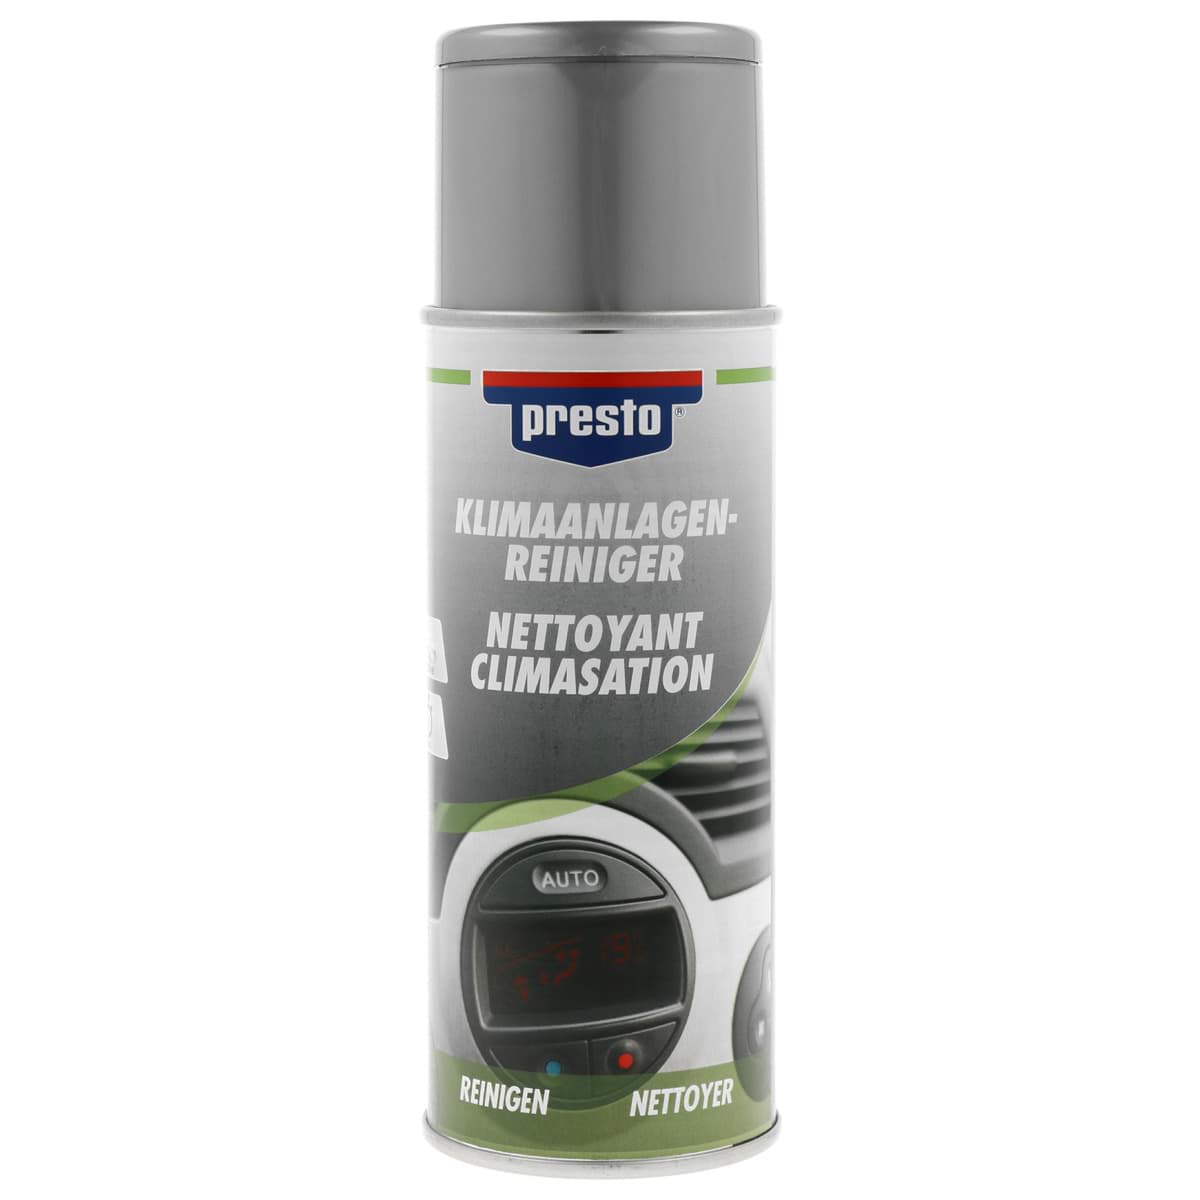 Afbeelding van Presto Klimaanlagenreiniger Spray 400ml 215995